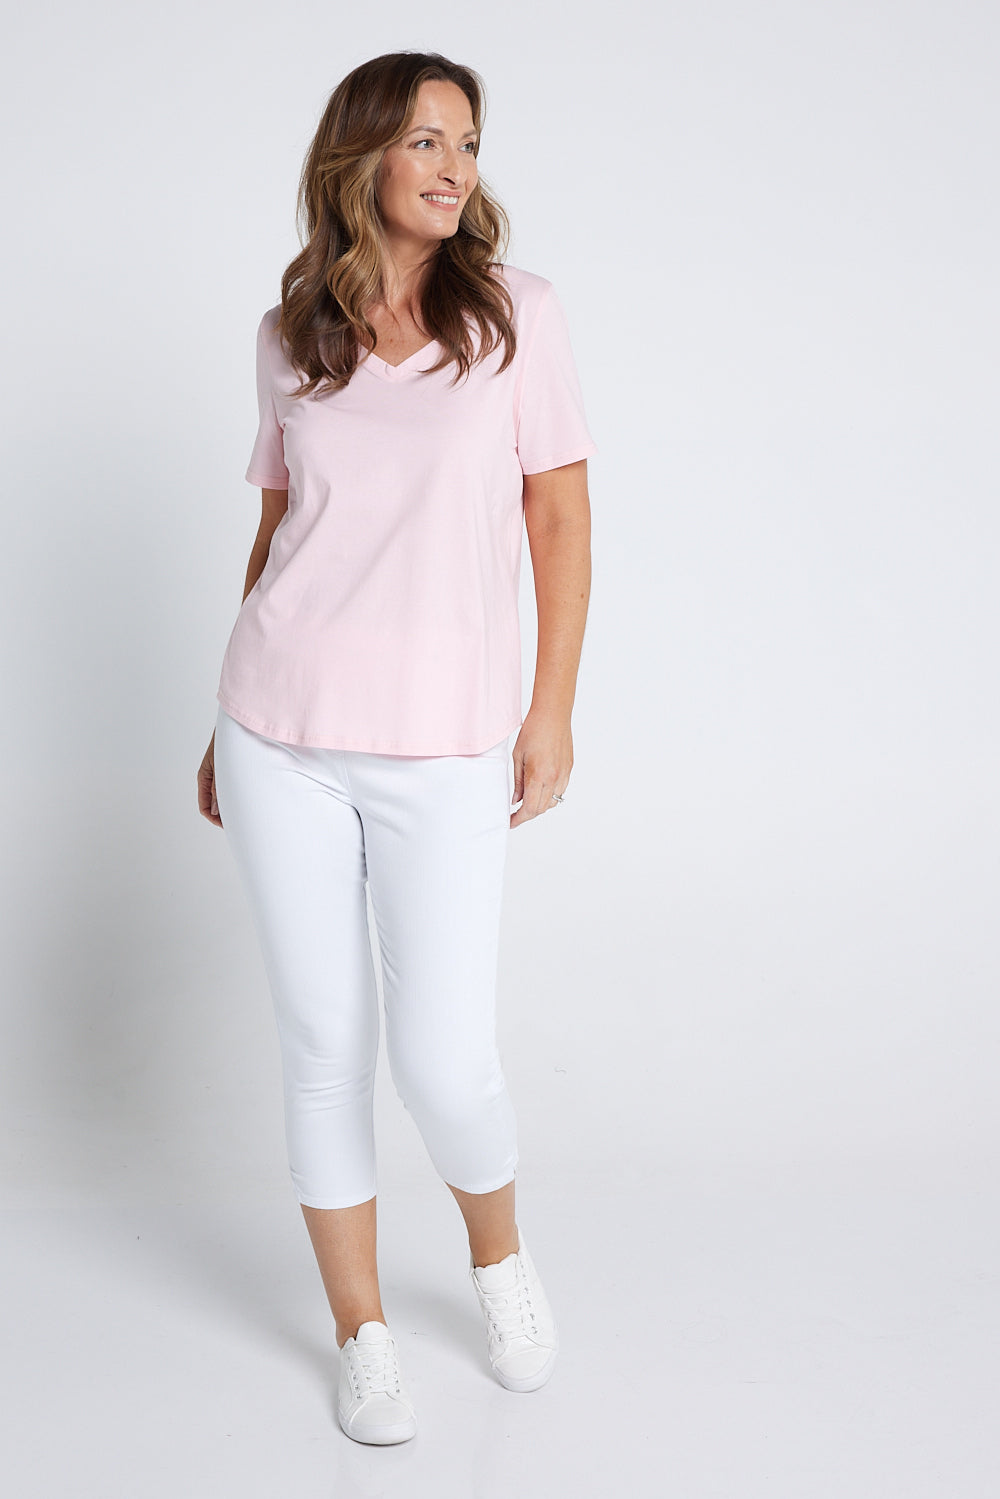 C&A Women's Capri Jeans Cotton Pink & White Stripe Stretch Denim